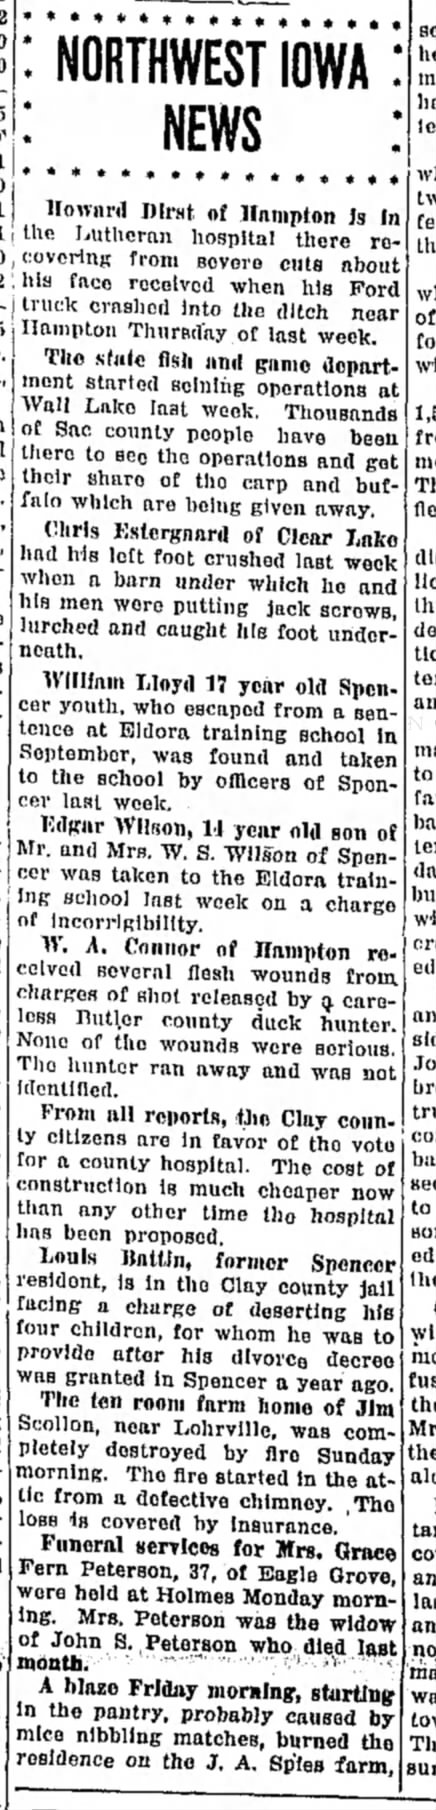 The Humboldt IndependentHumboldt, IowaTuesday, November 11, 1930 p5